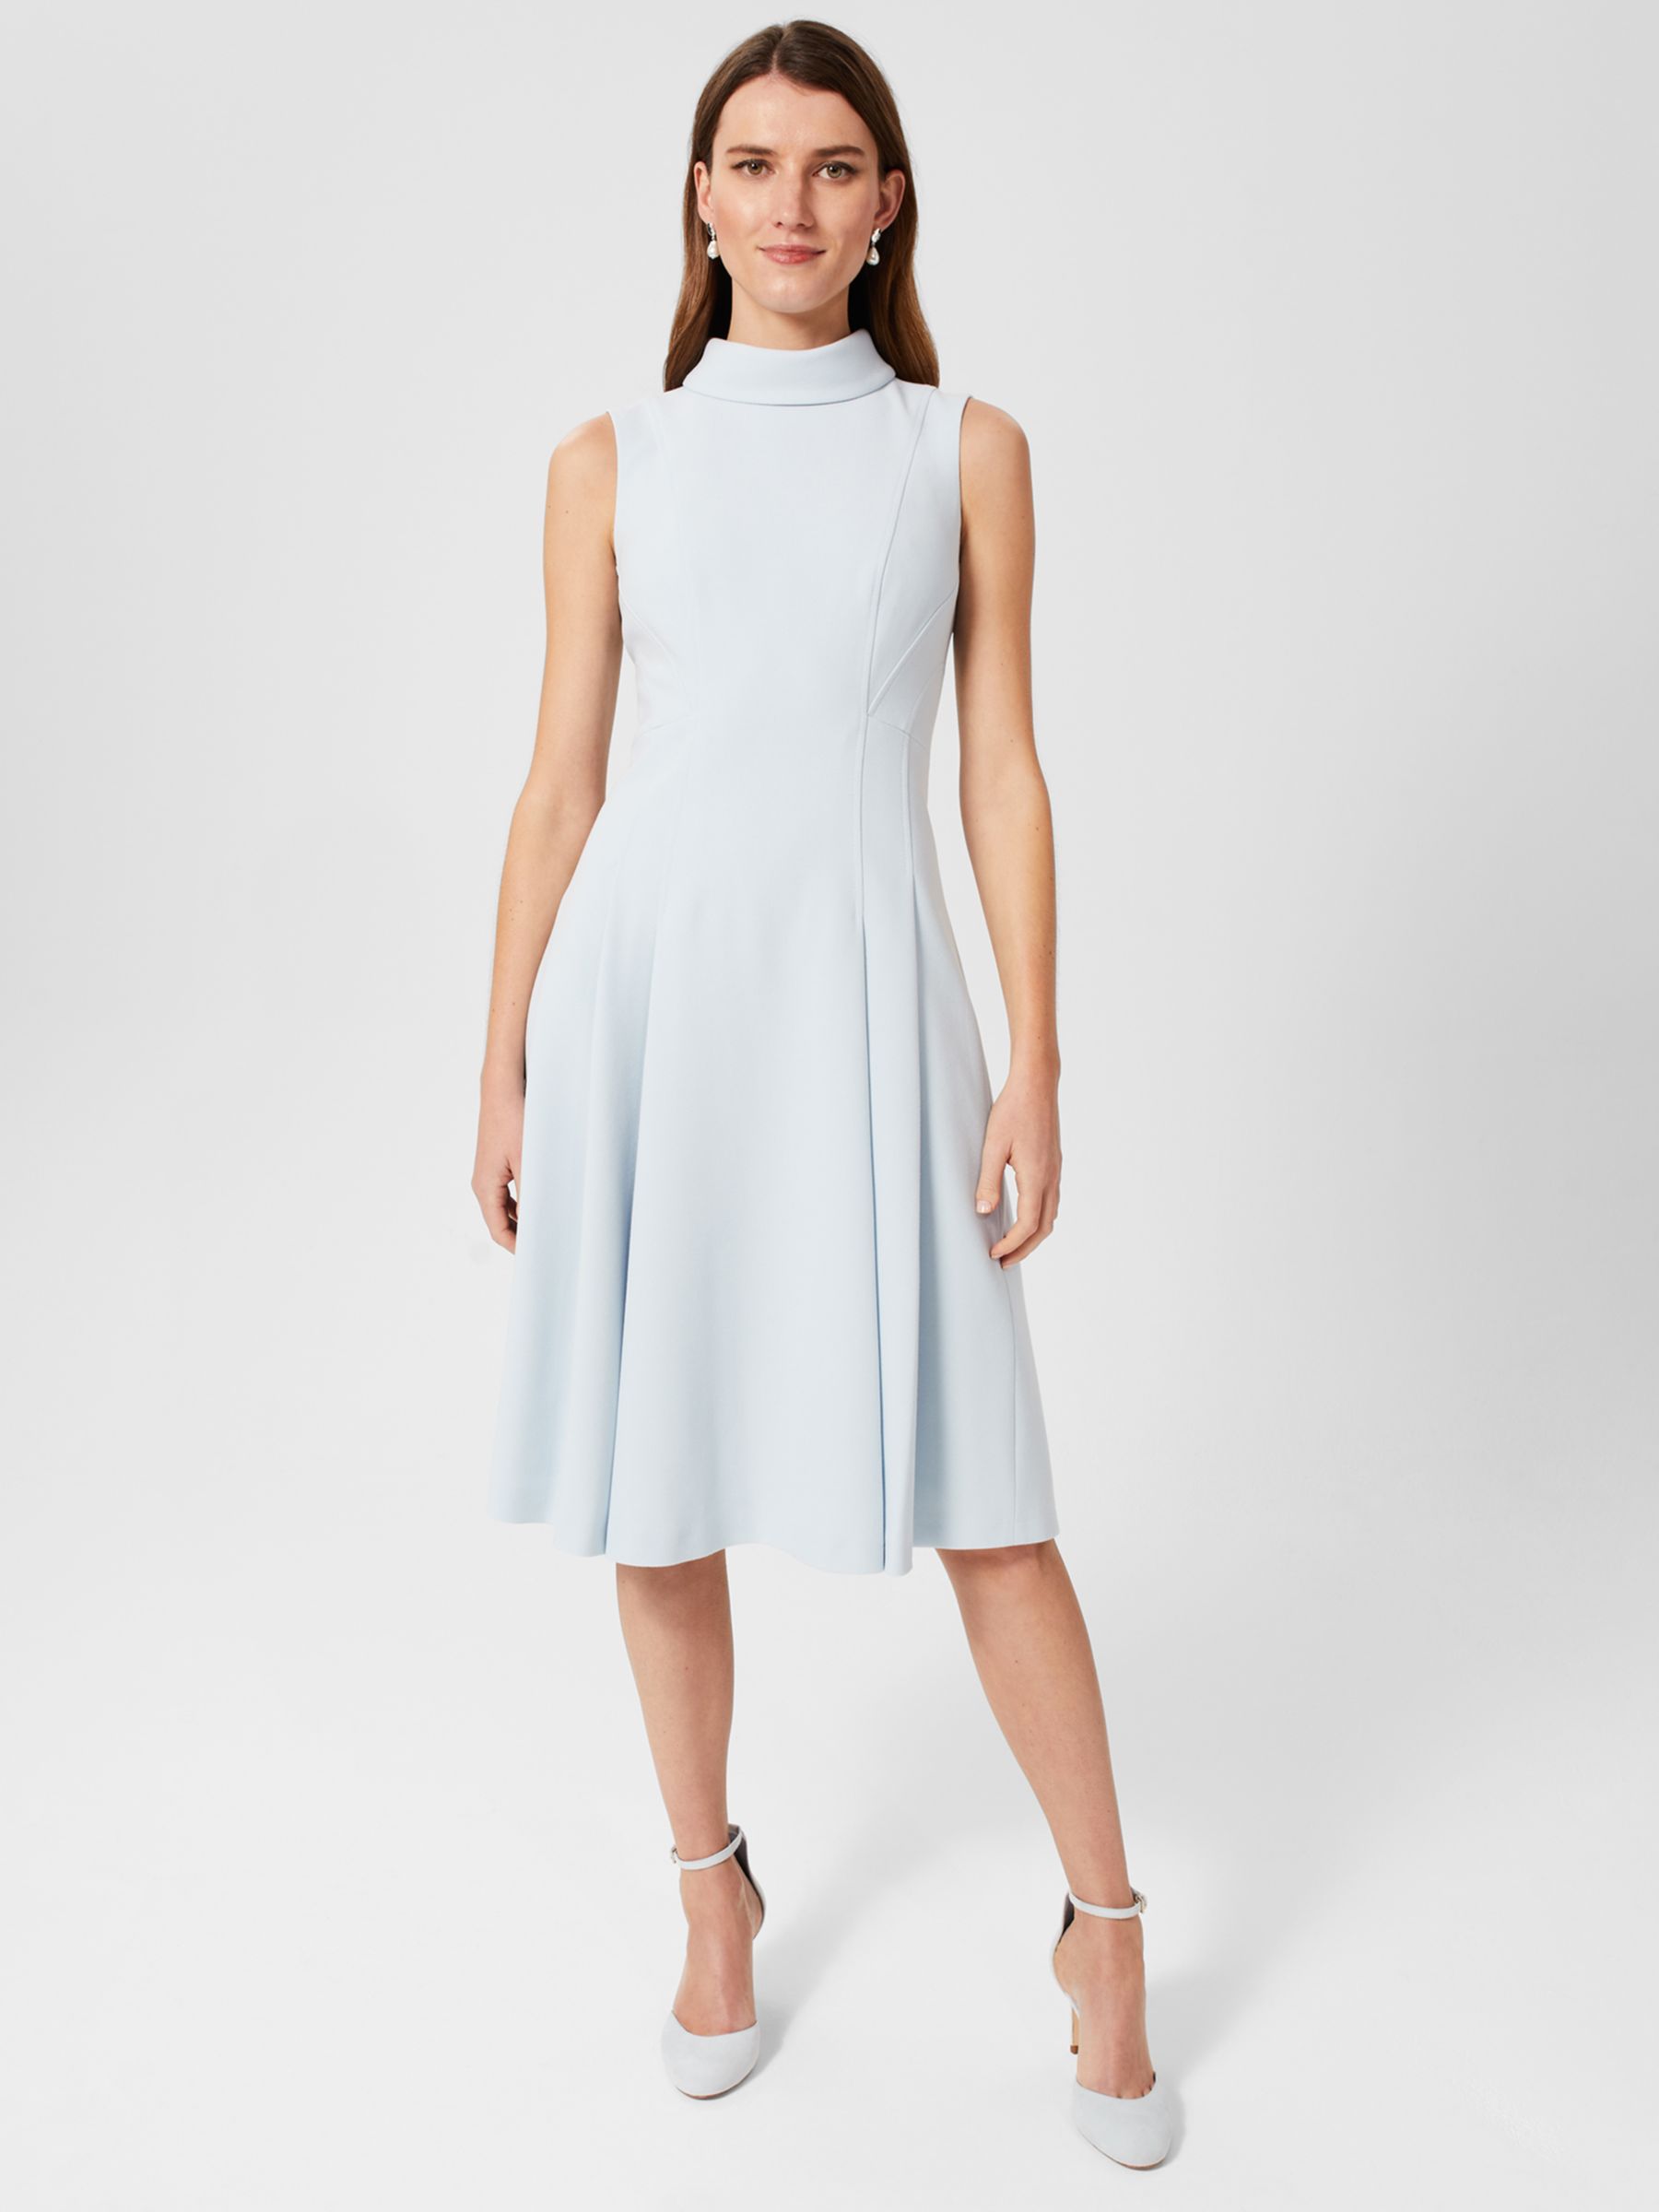 Hobbs Whilemina Plain Dress, Pale Blue at John Lewis & Partners